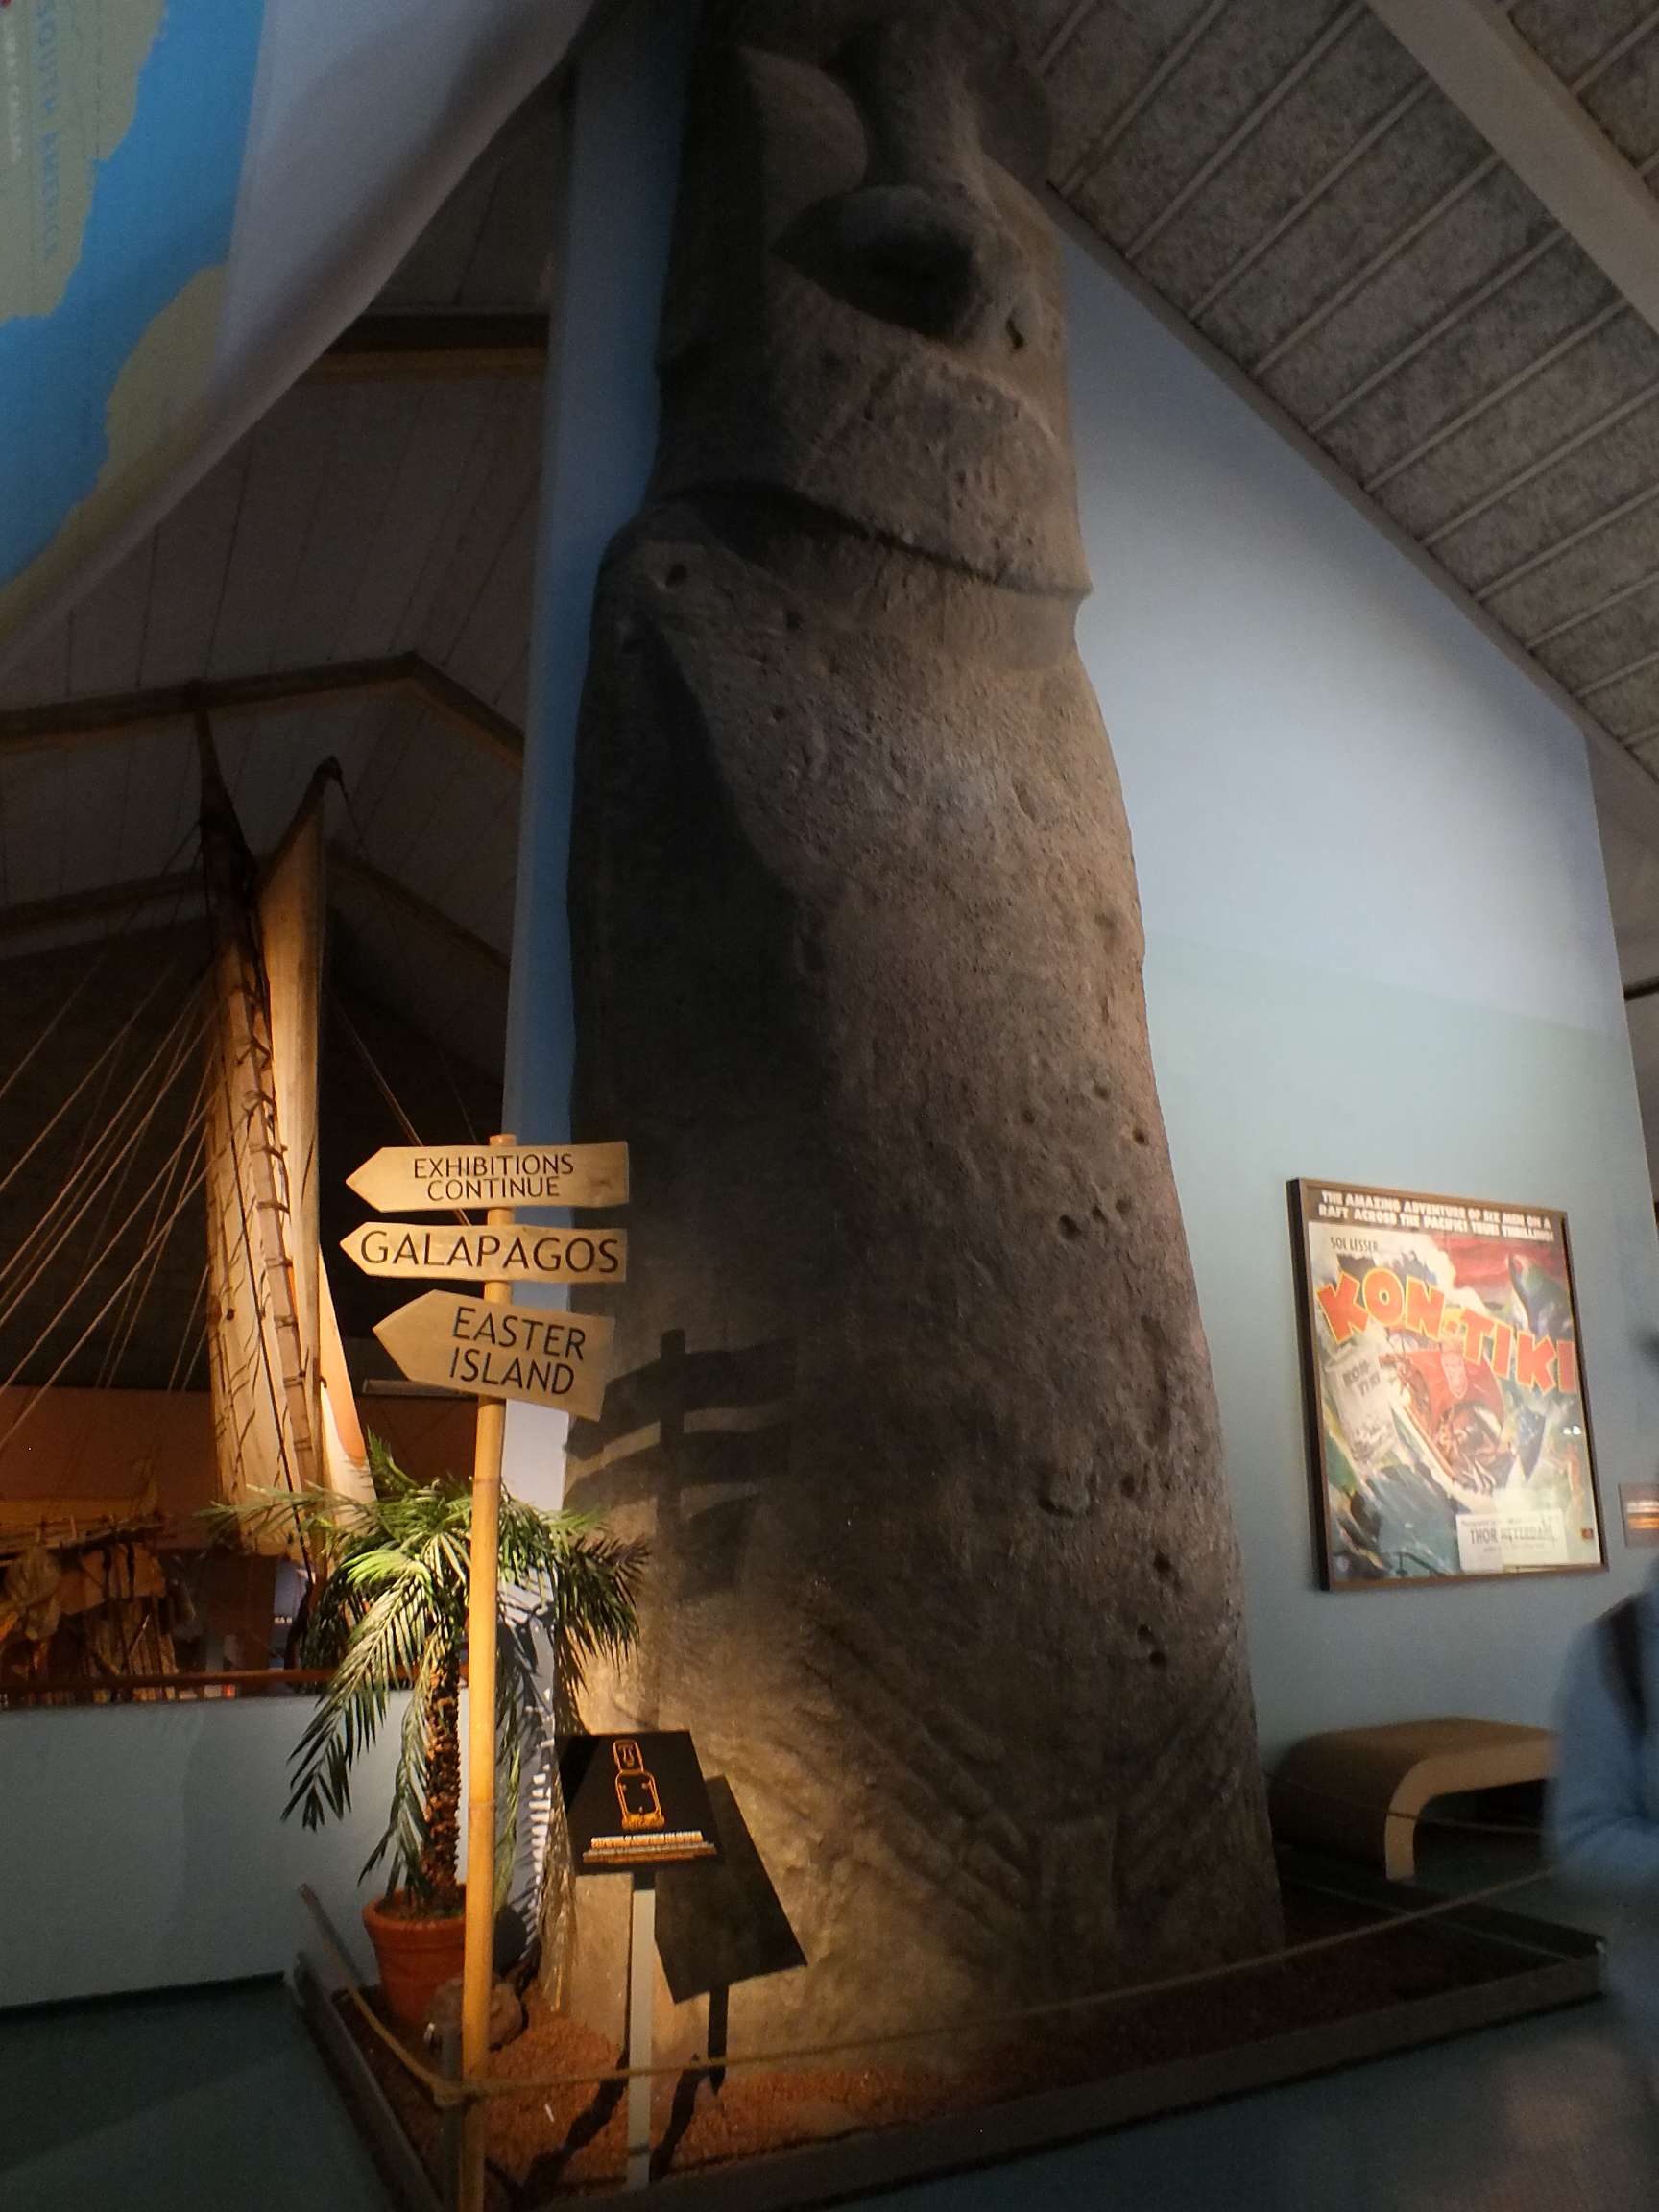 Kon-Tiki Müzesi (Kon-Tiki Museet)